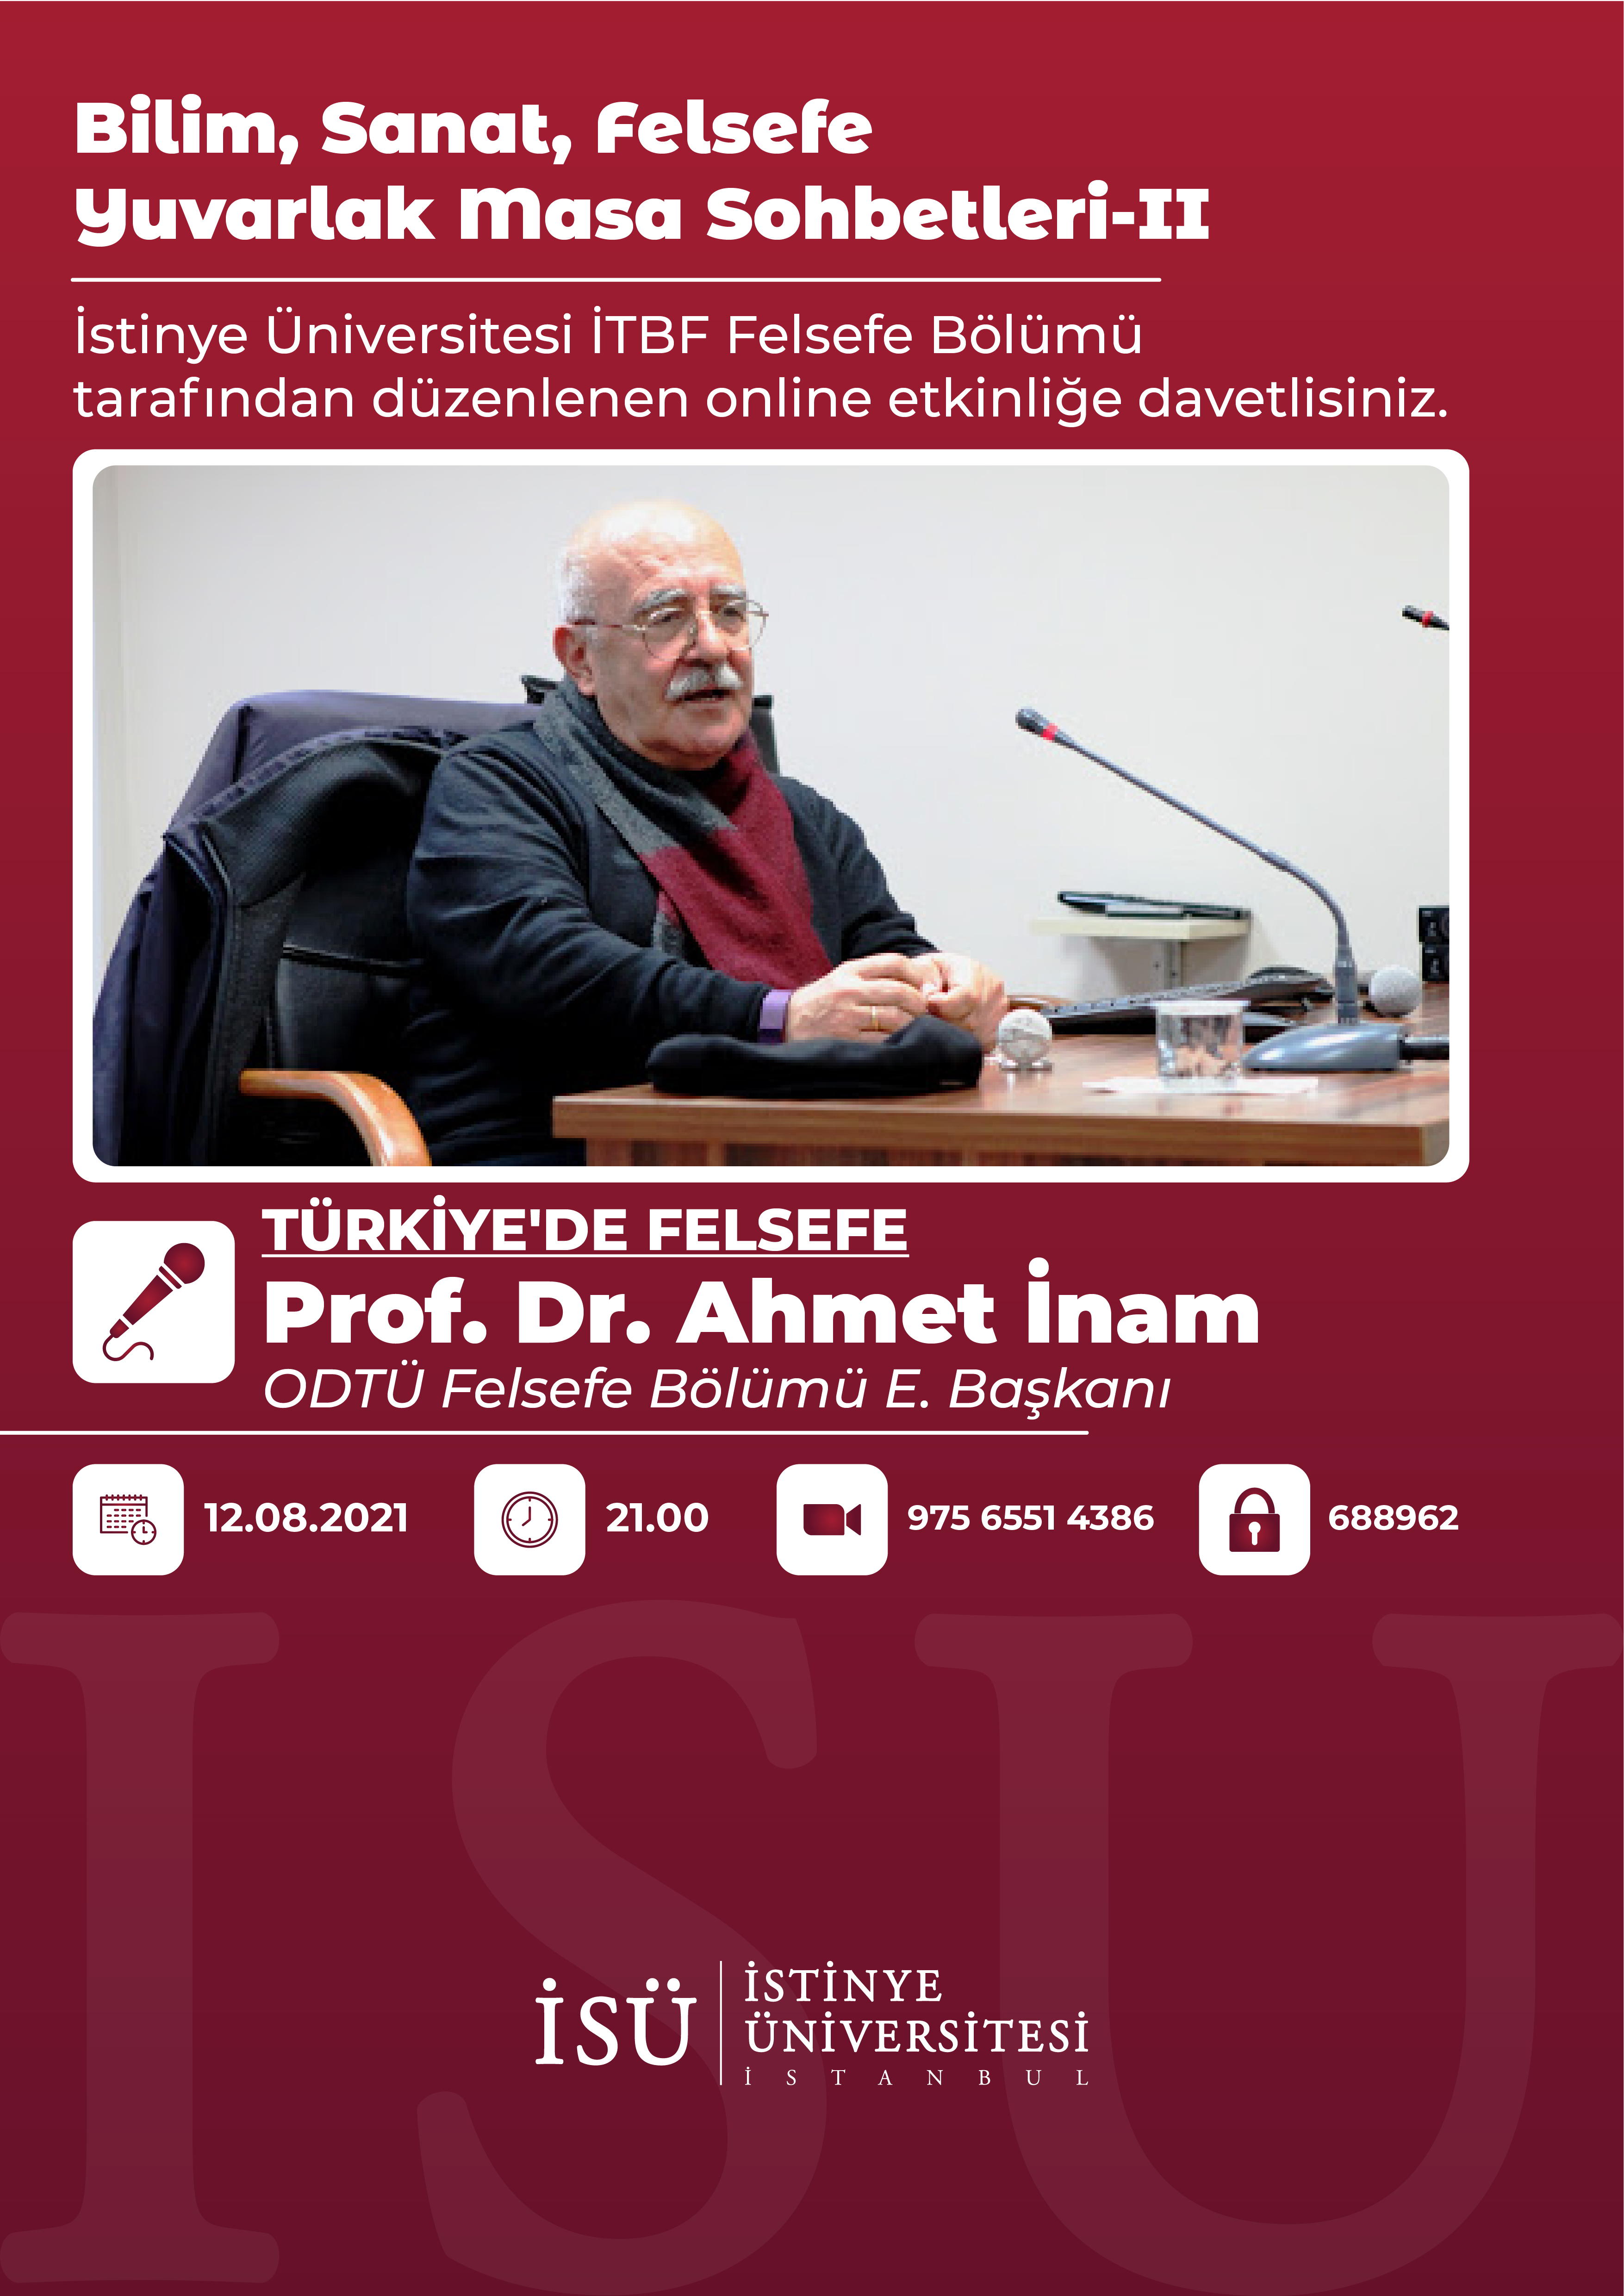 Bilim, Sanat, Felsefe Yuvarlak Masa Sohbetleri: Türkiye'de Felsefe